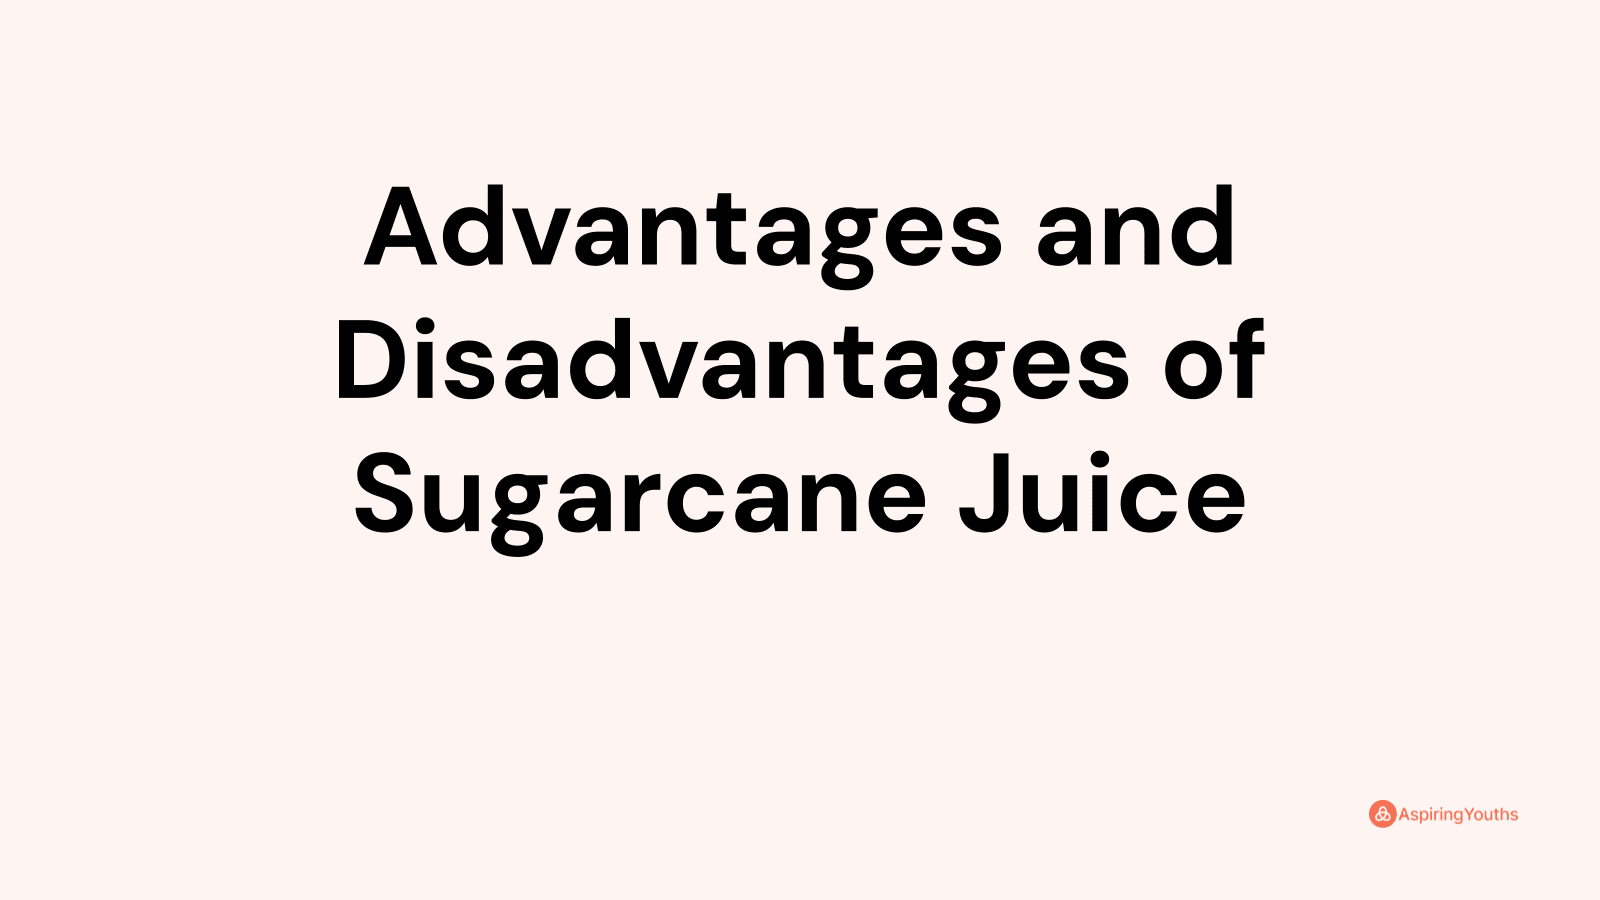 Advantages and disadvantages of Sugarcane Juice